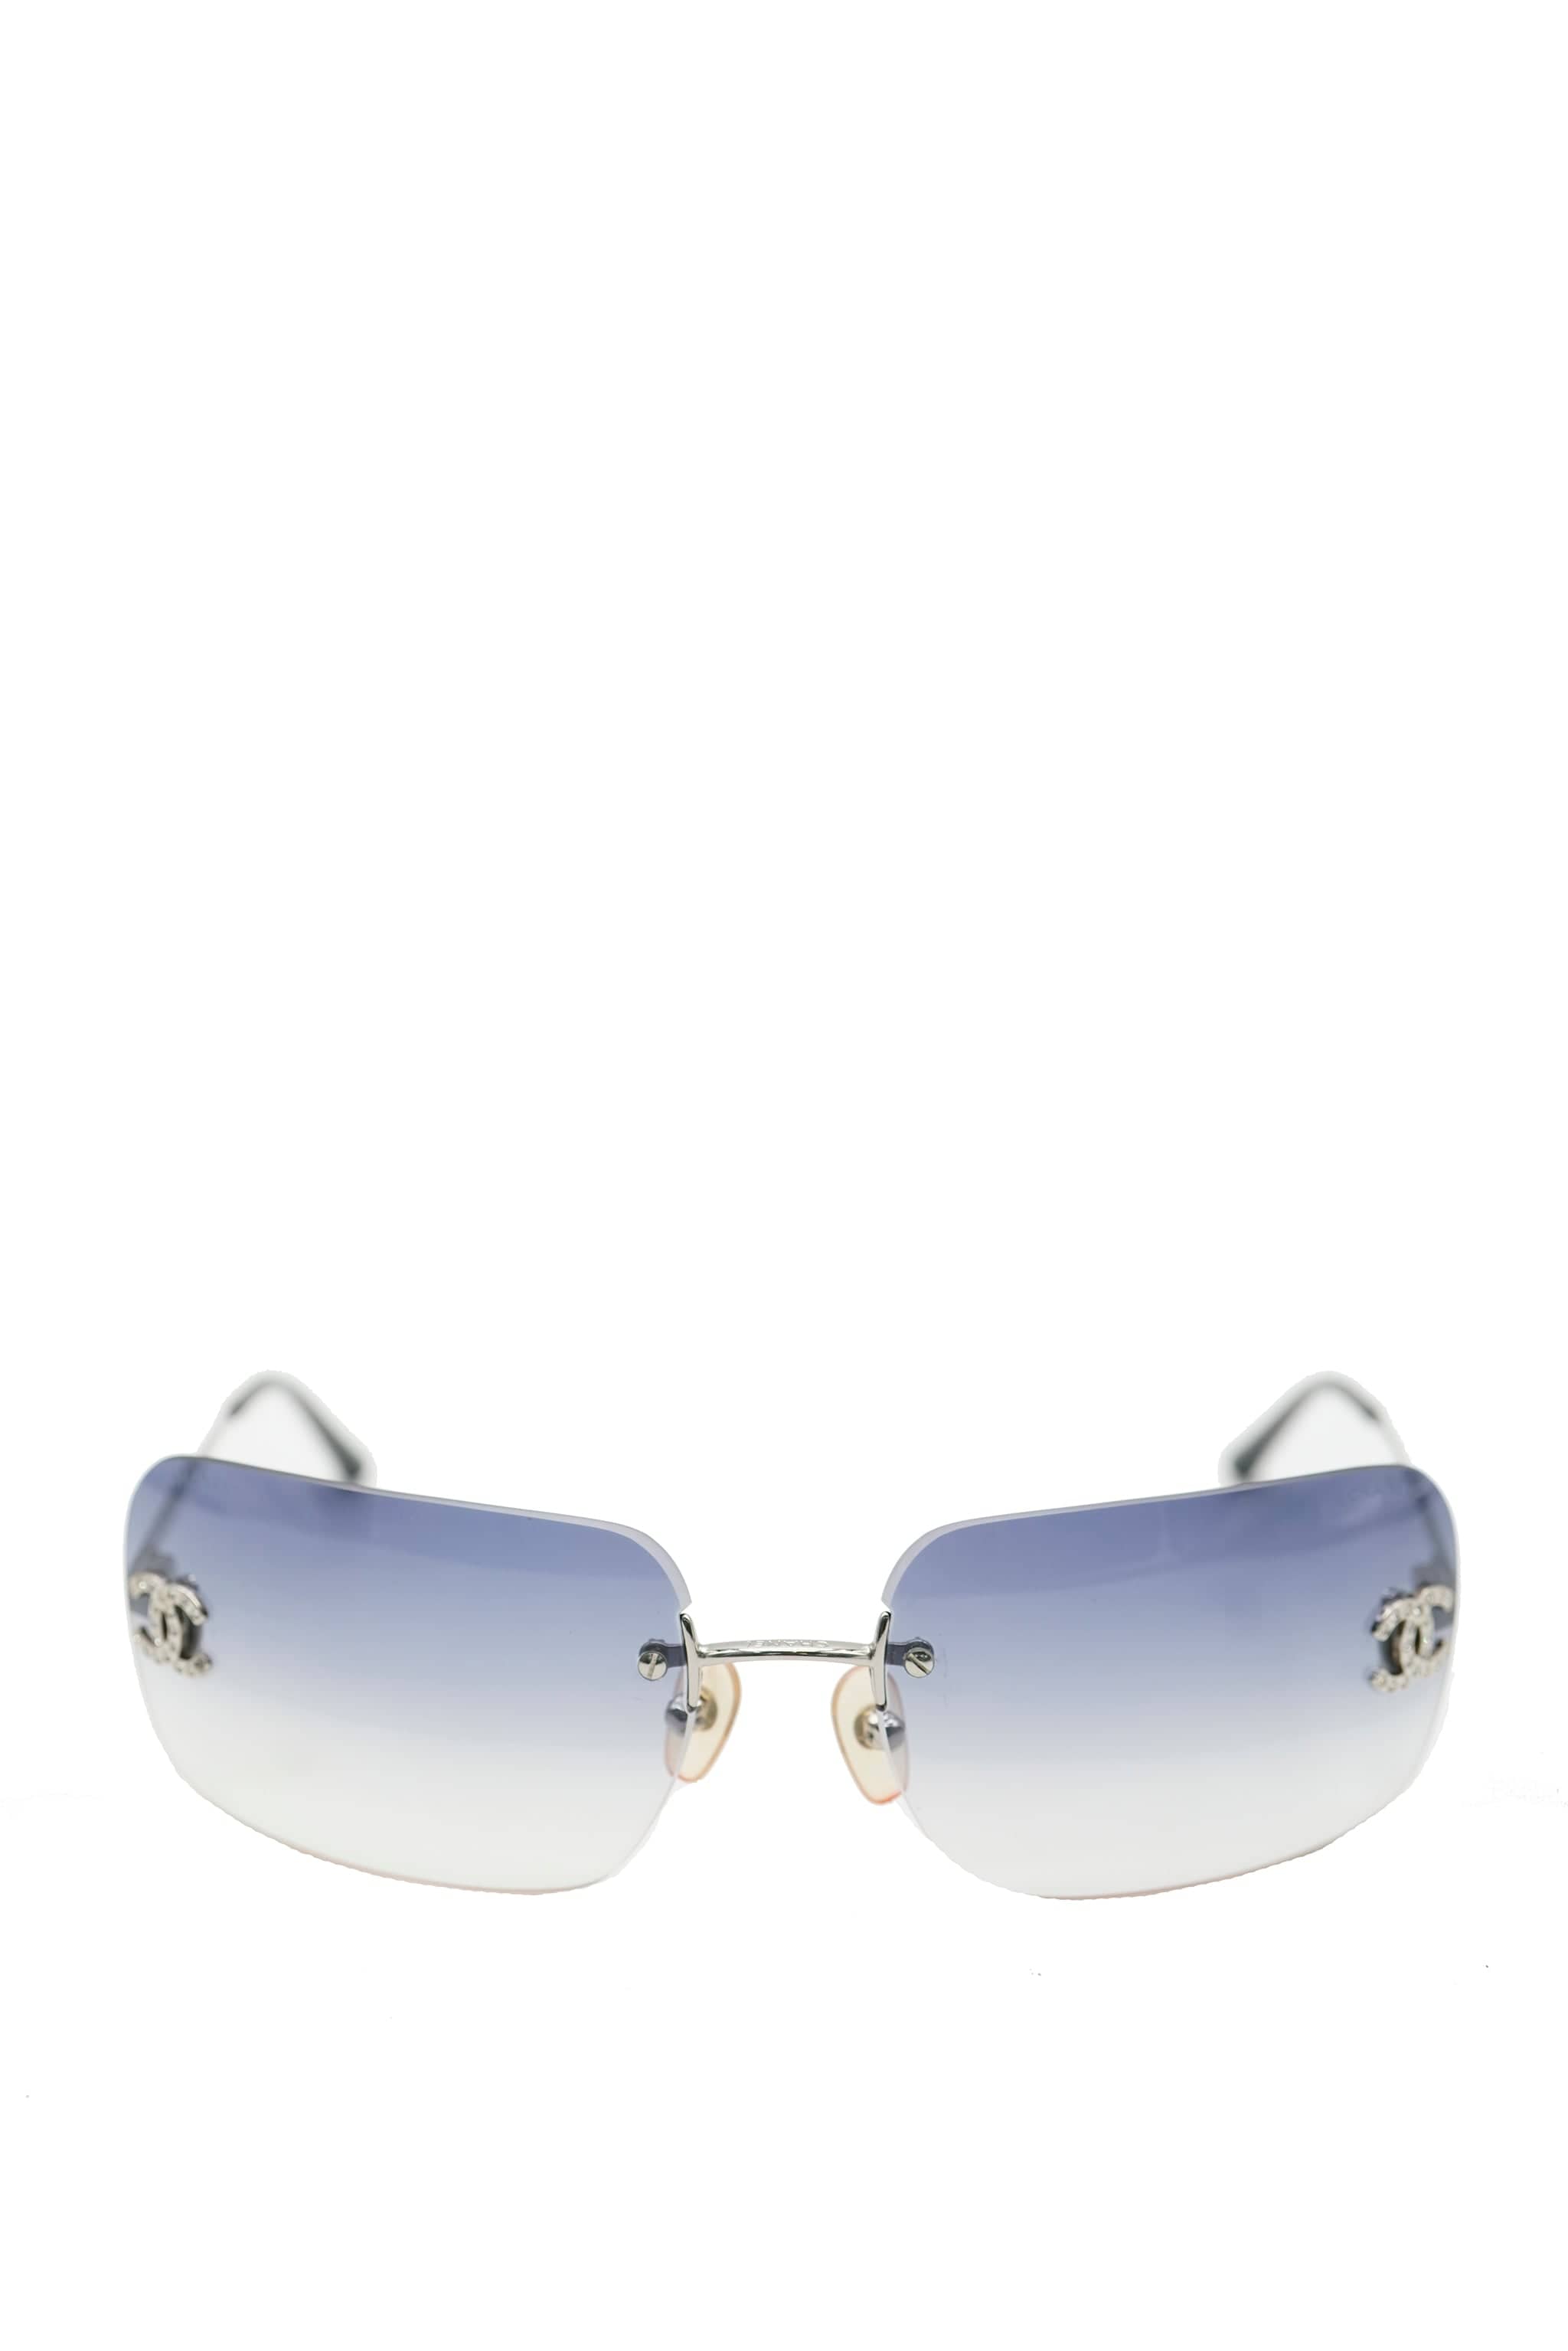 Vintage Chanel Pink Tinted Clear Sunglasses Rhinestone CC Logo